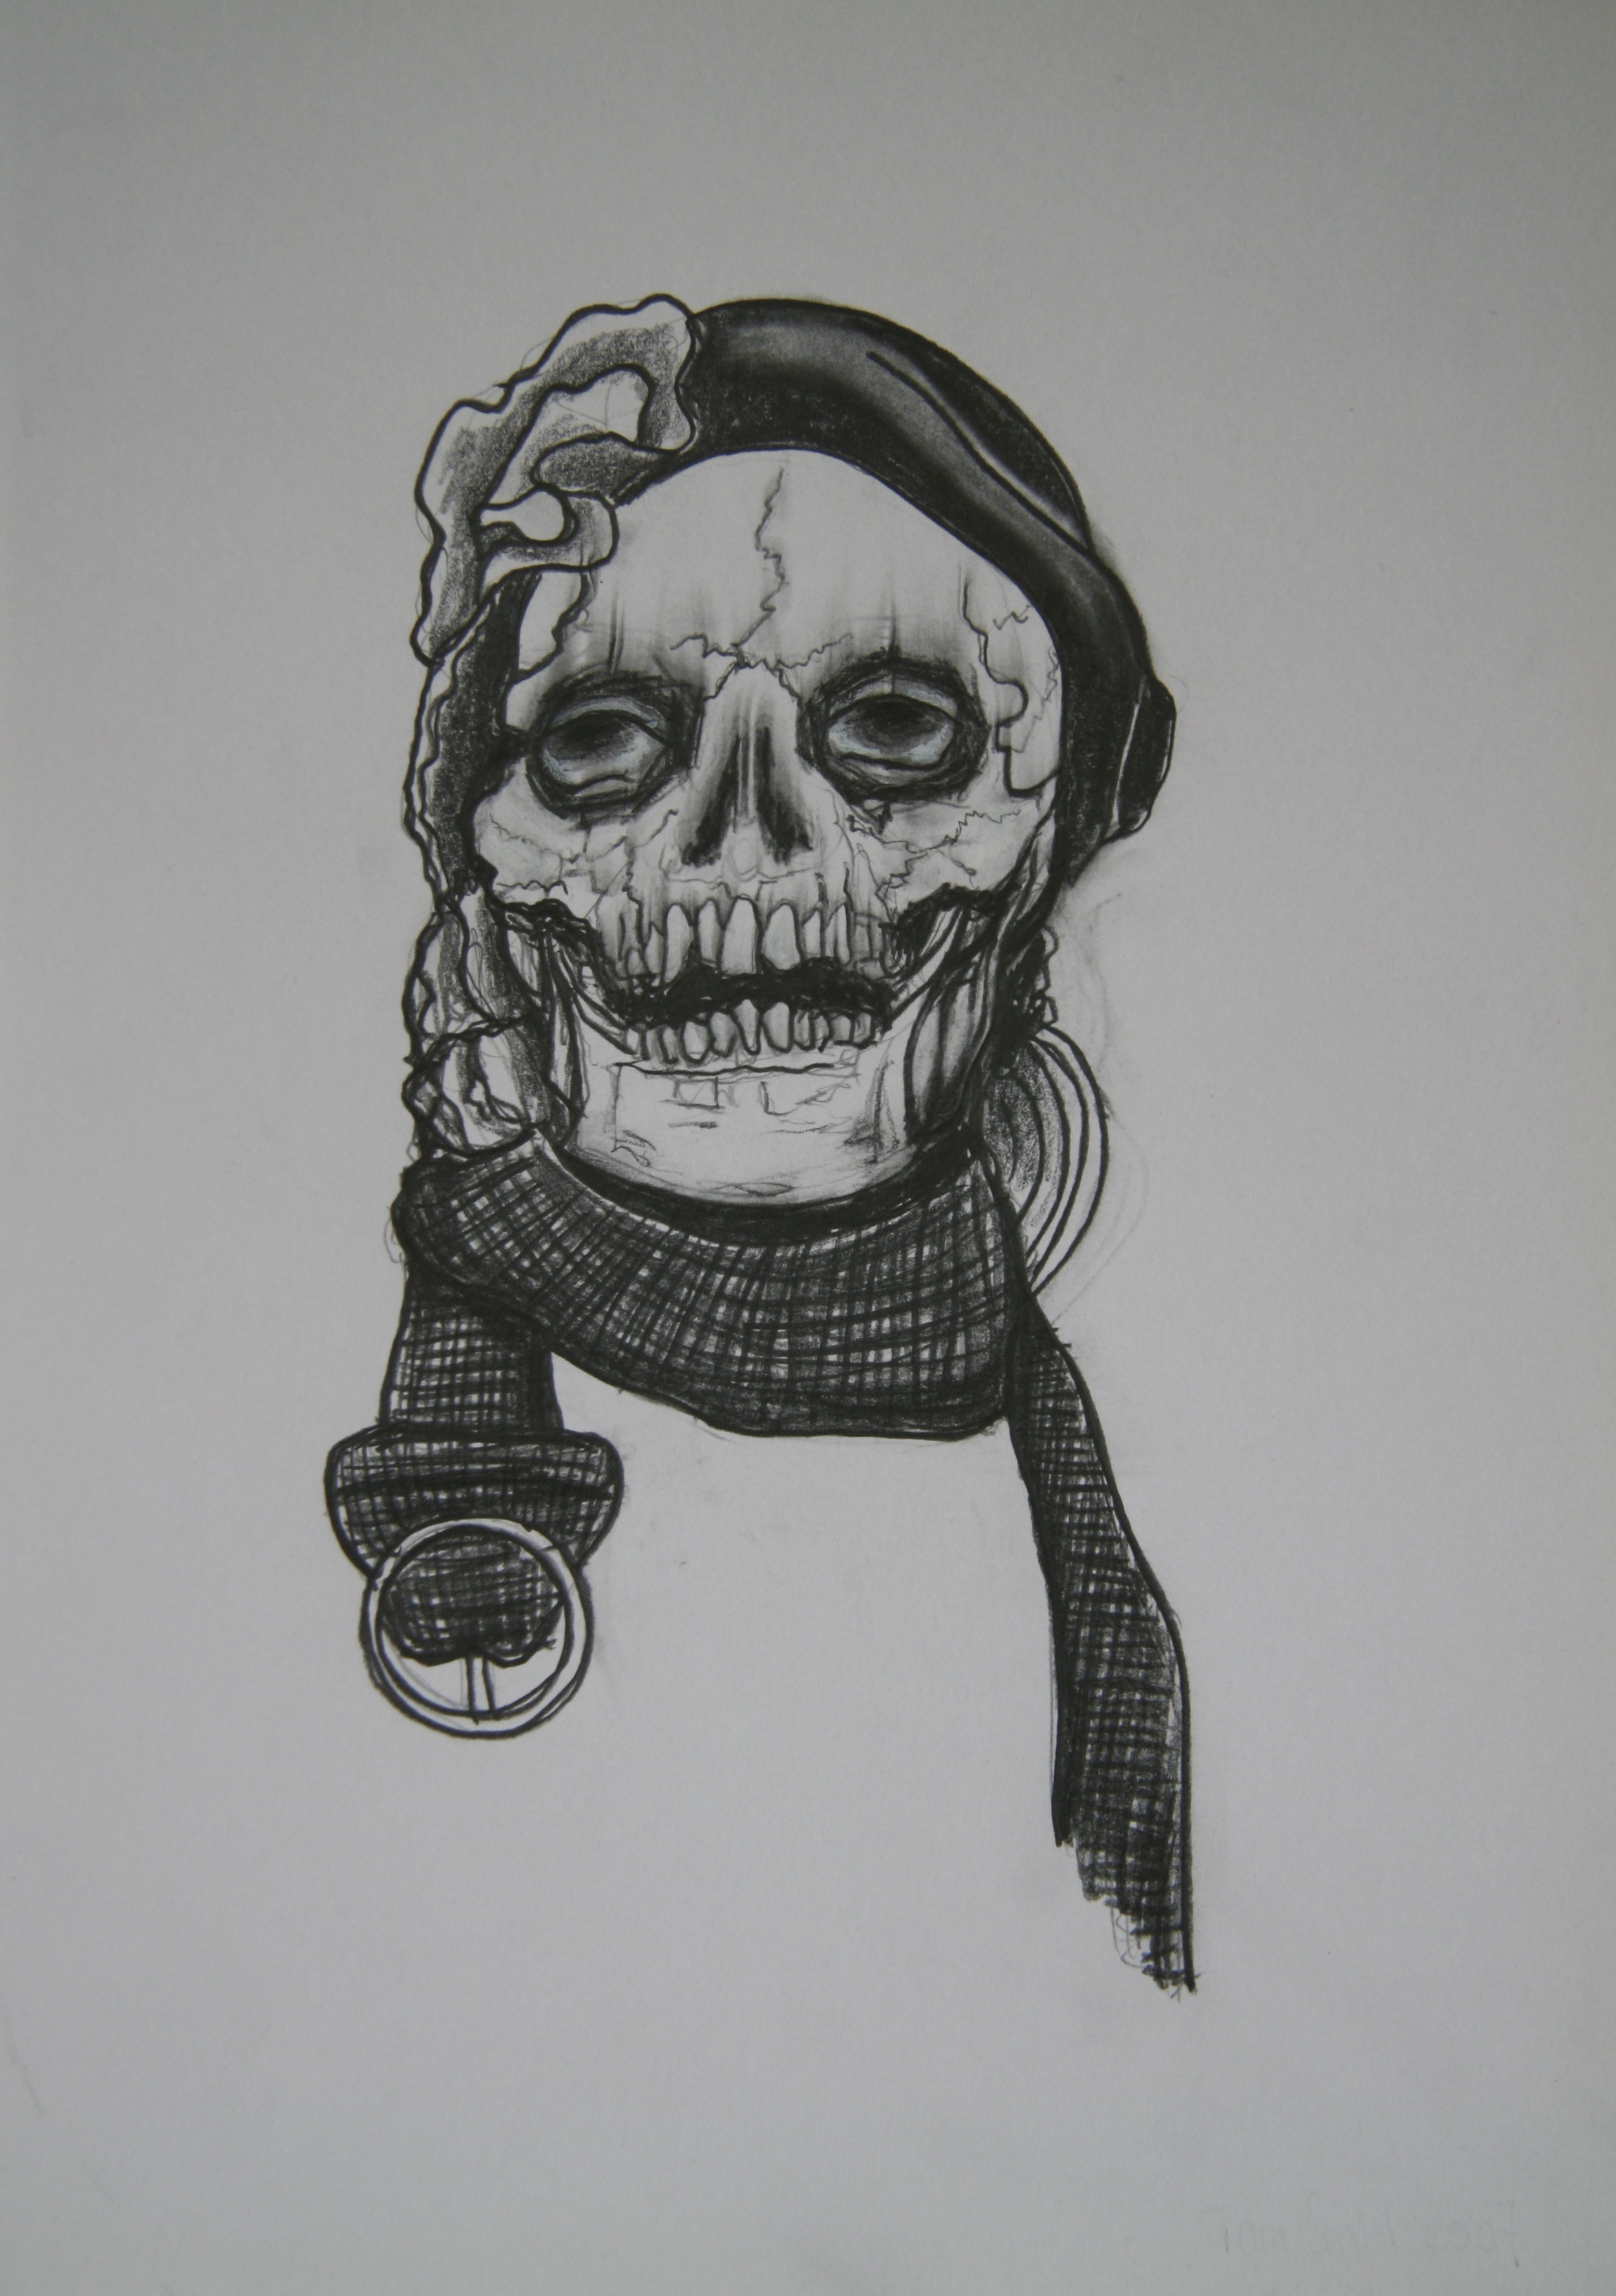 Skull 5, 30x21cm, pencil on paper